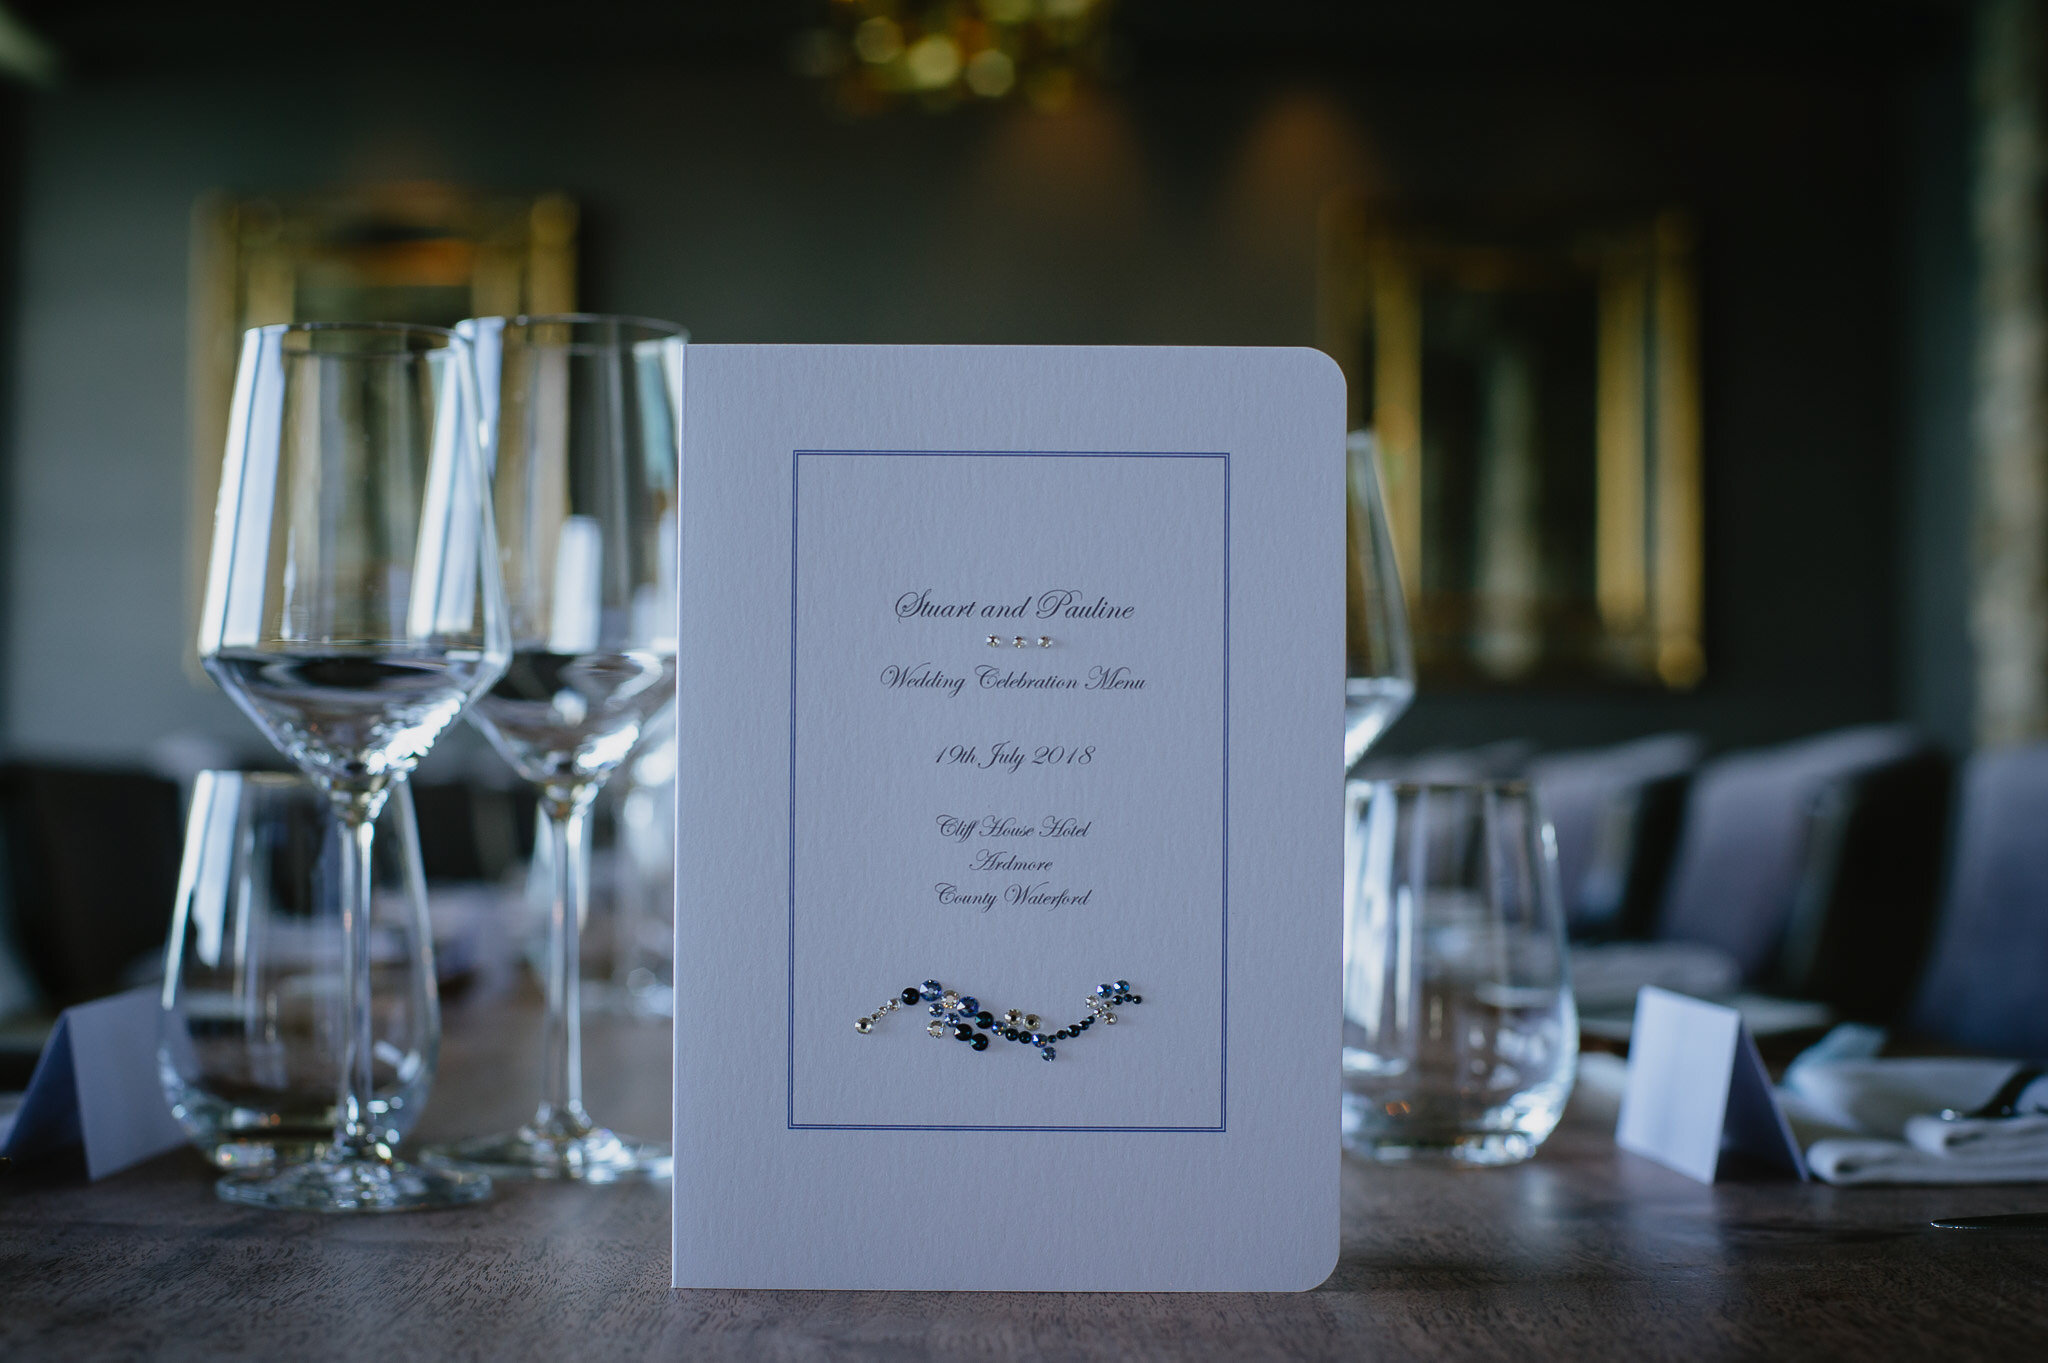 Wedding invitations from best wedding vendors